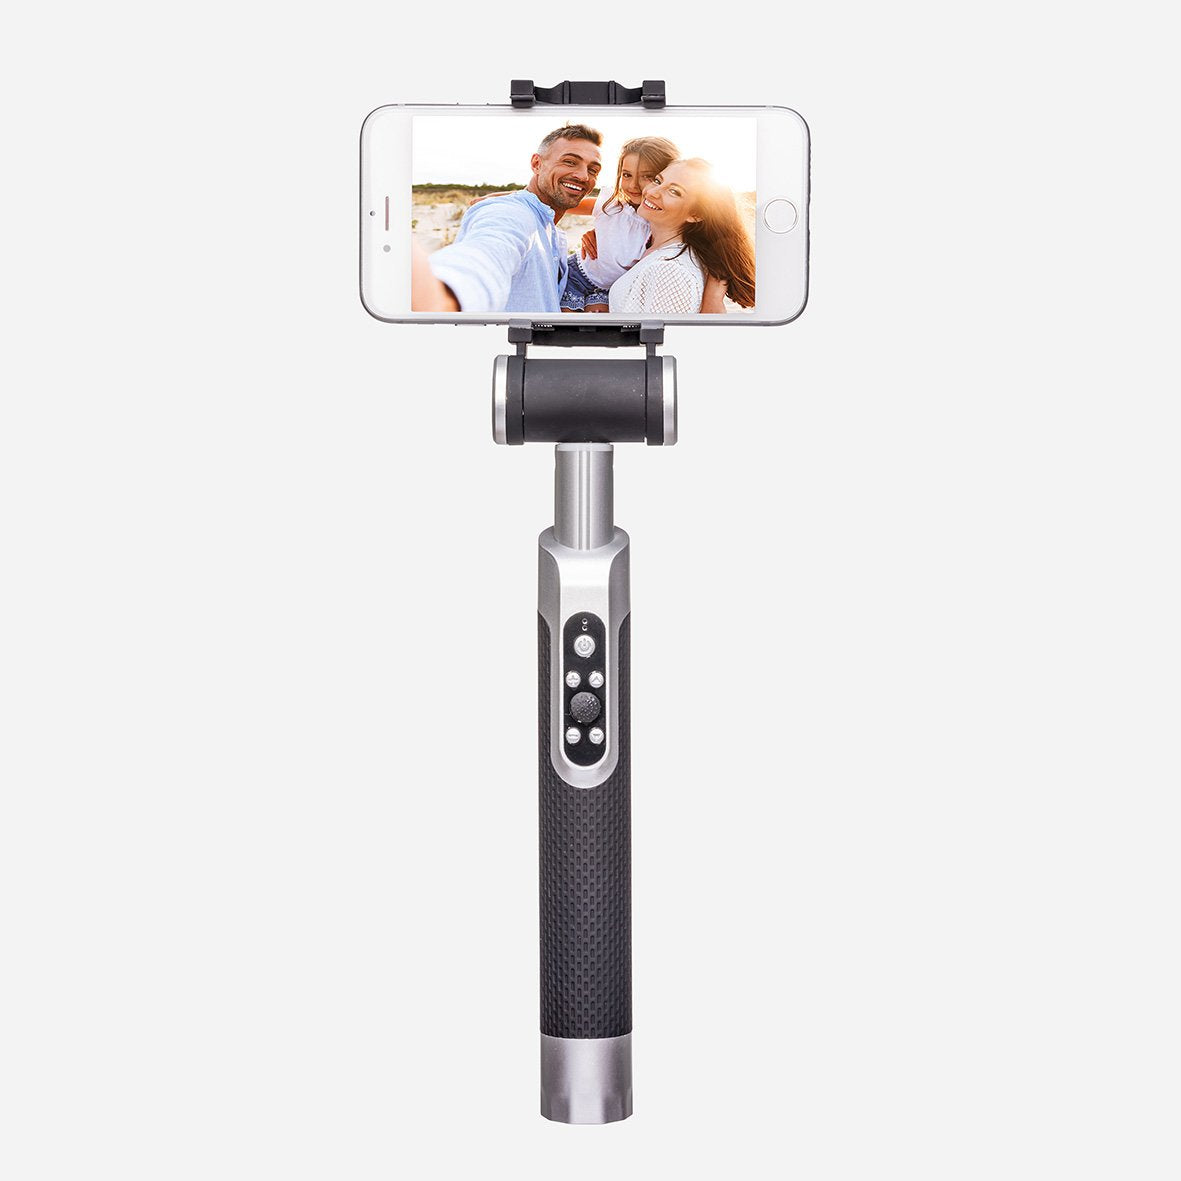 Pictar Smart Selfie Stick Black / Pink / White